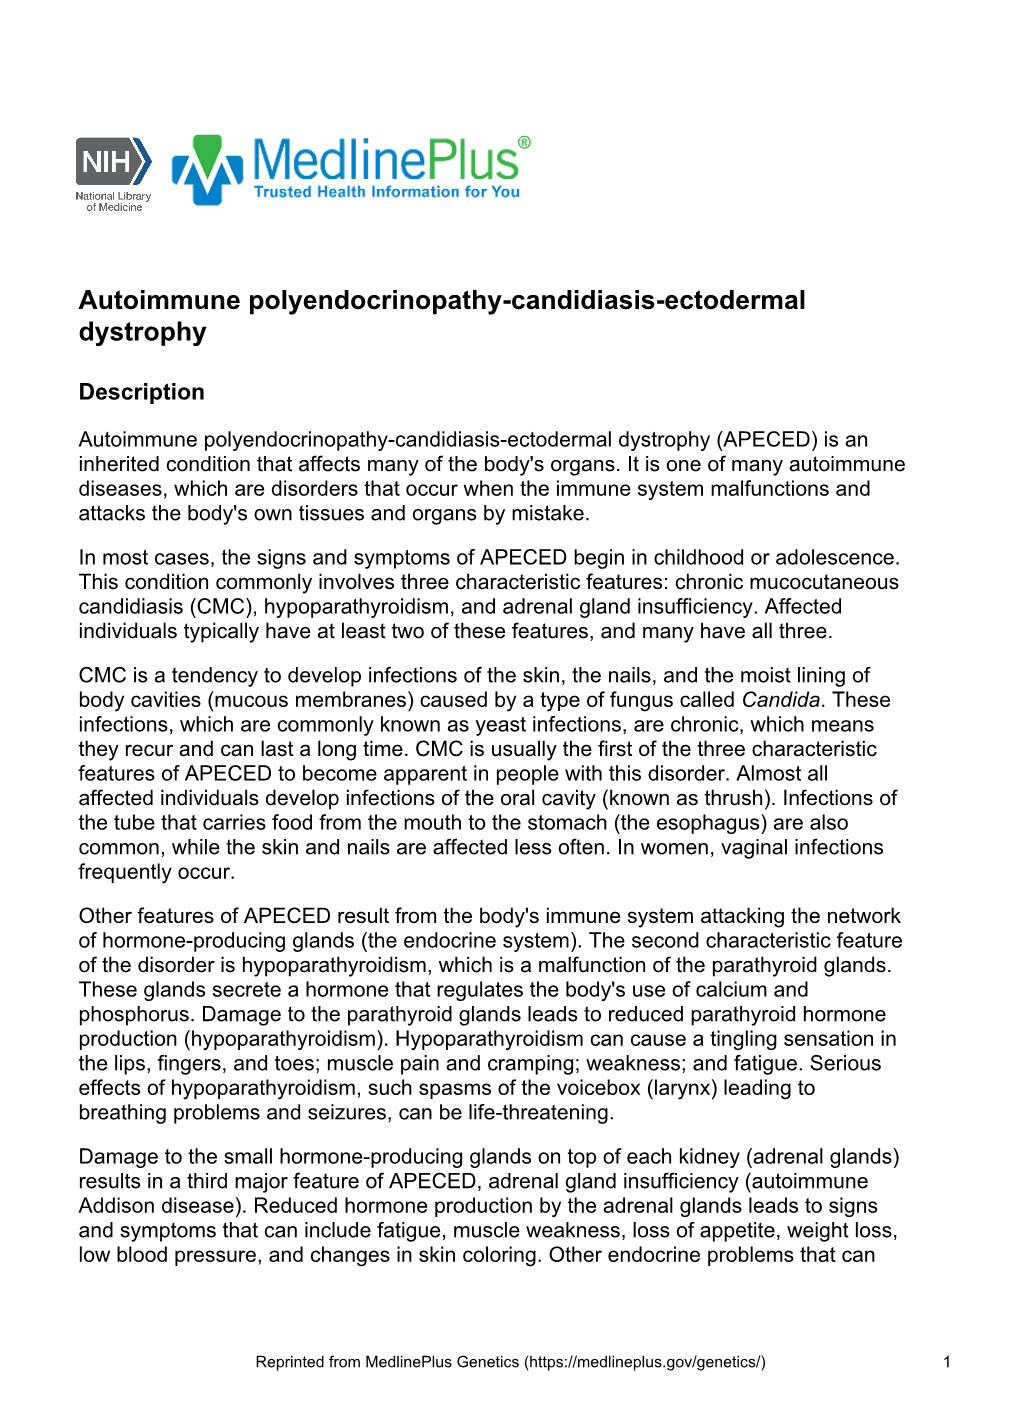 Autoimmune Polyendocrinopathy-Candidiasis-Ectodermal Dystrophy